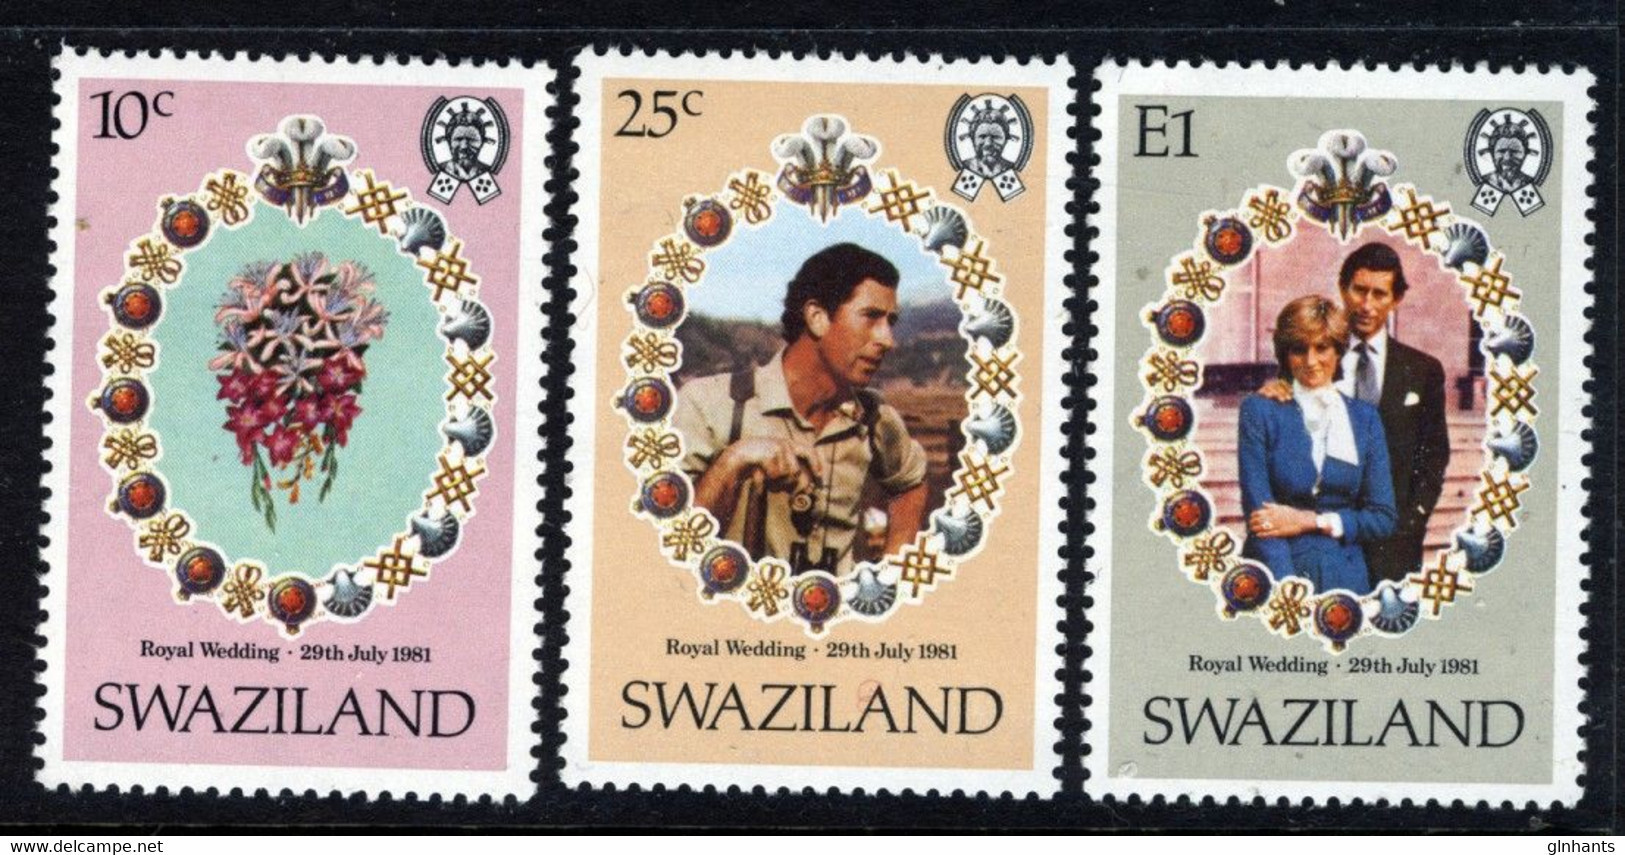 SWAZILAND - 1981 ROYAL WEDDING SET (3V) FINE MNH ** SG 376-378 - Swaziland (1968-...)